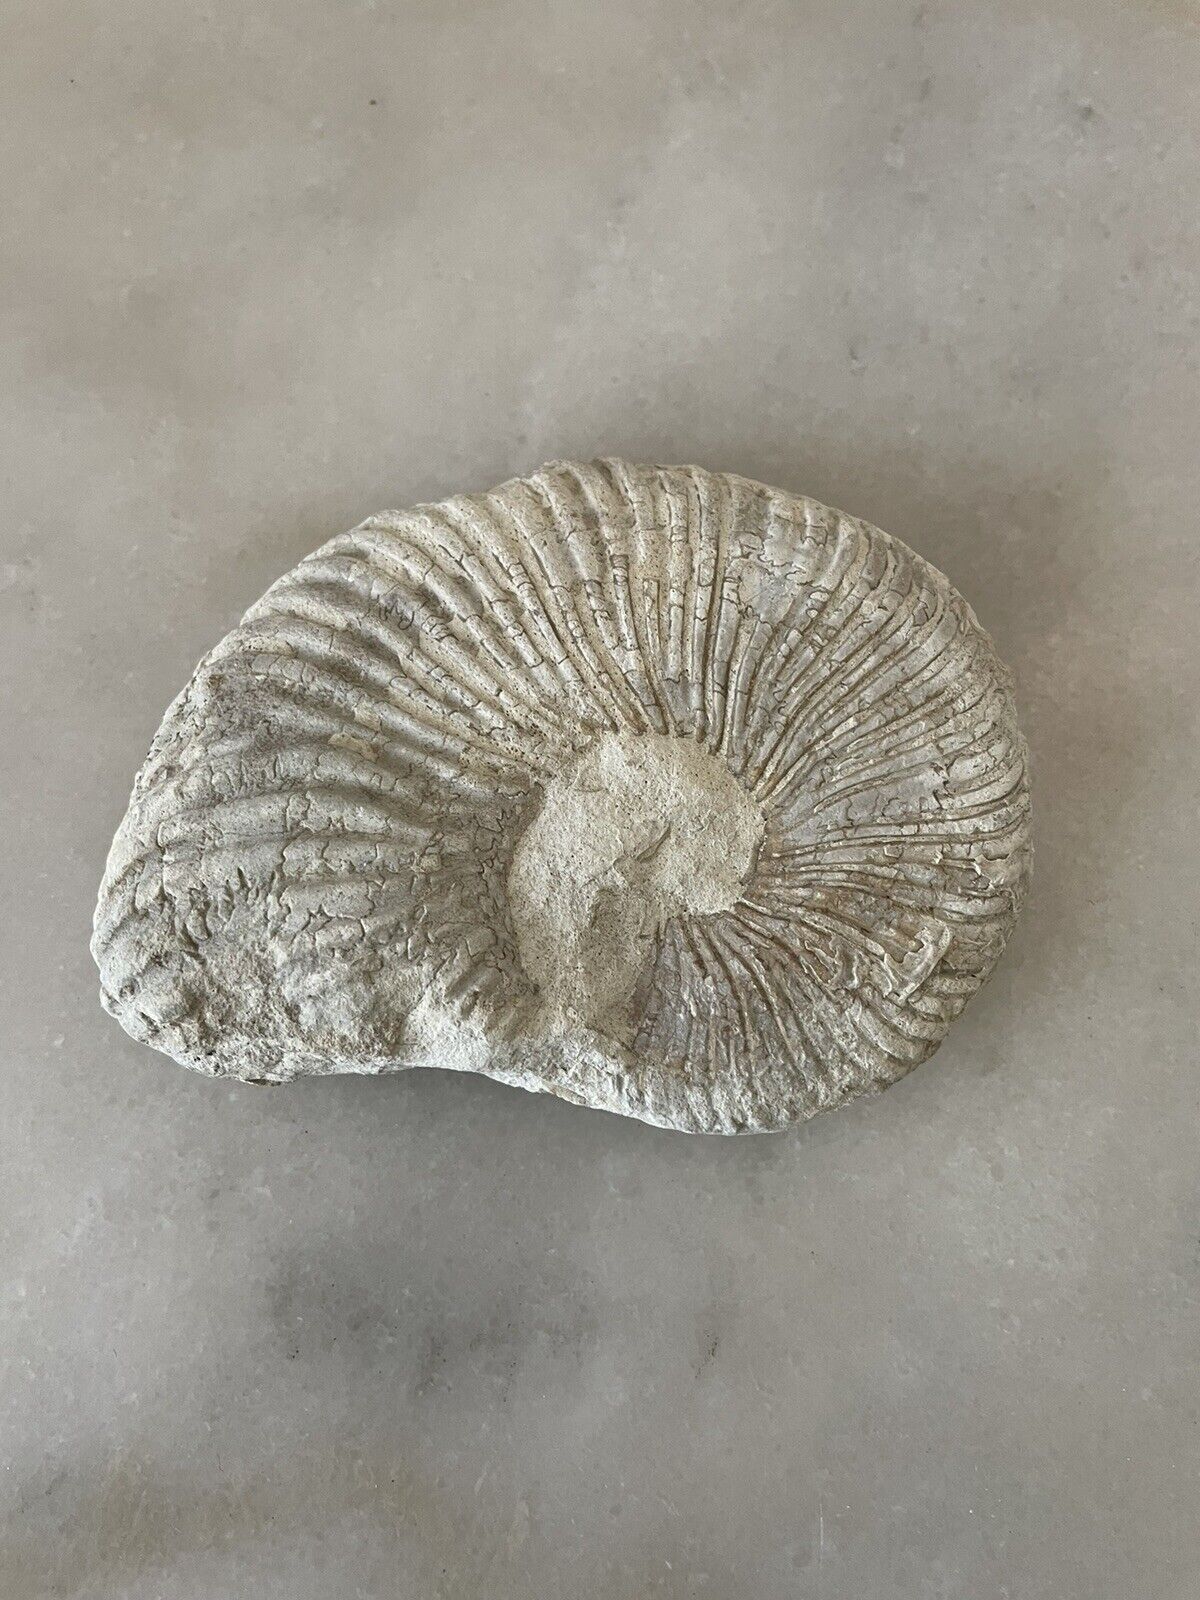 Texas Ammonite Cretaceous Fossil 4.0”